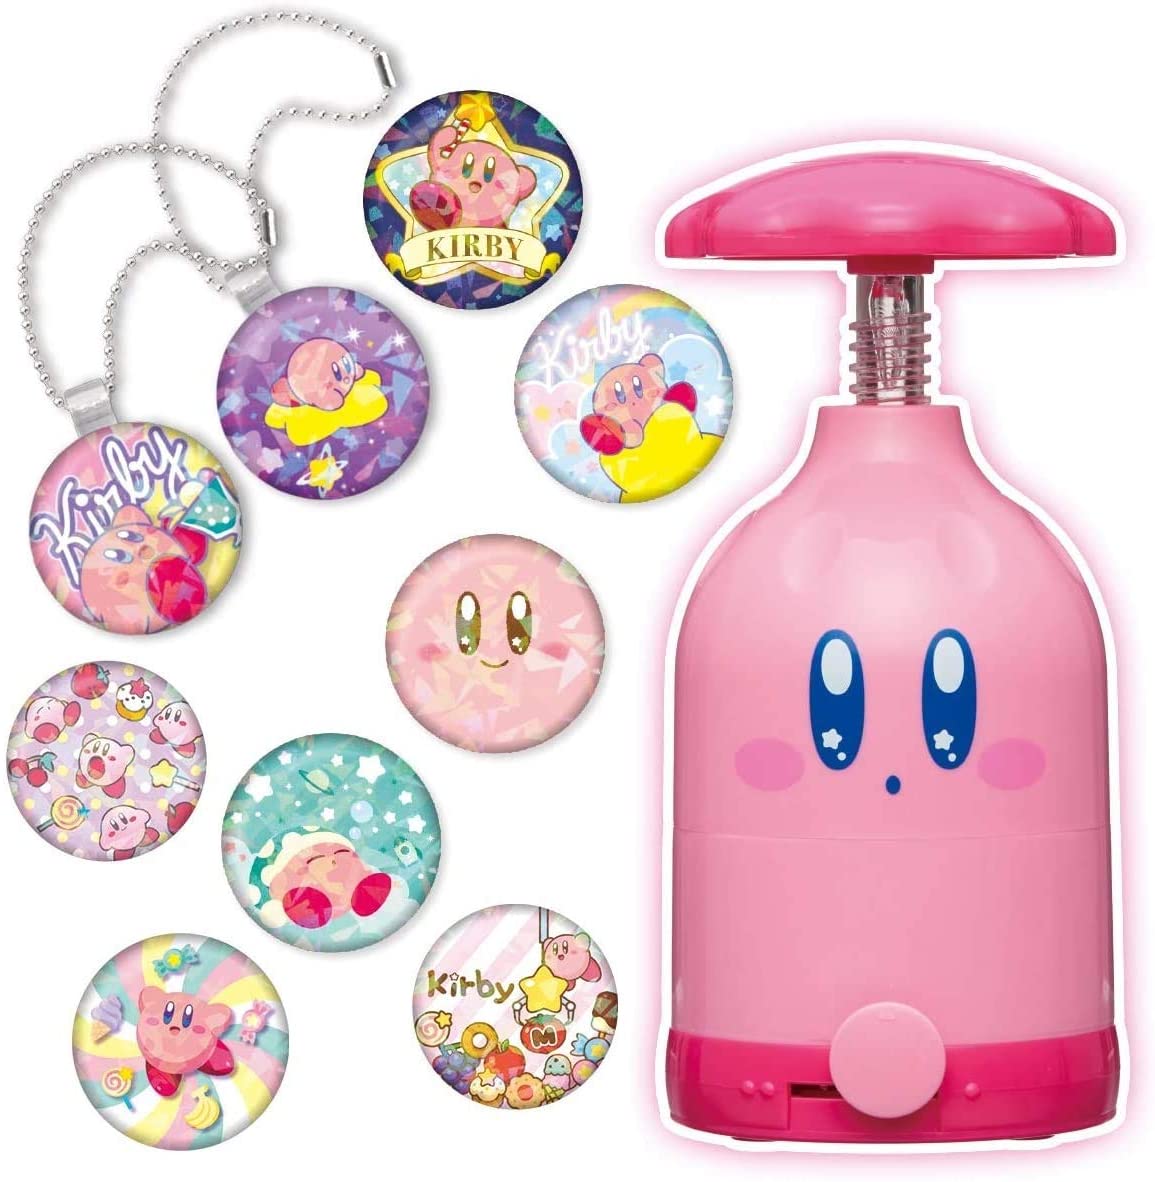 BANDAI Can Batch Good Kirby's Sparkle Pupp Set